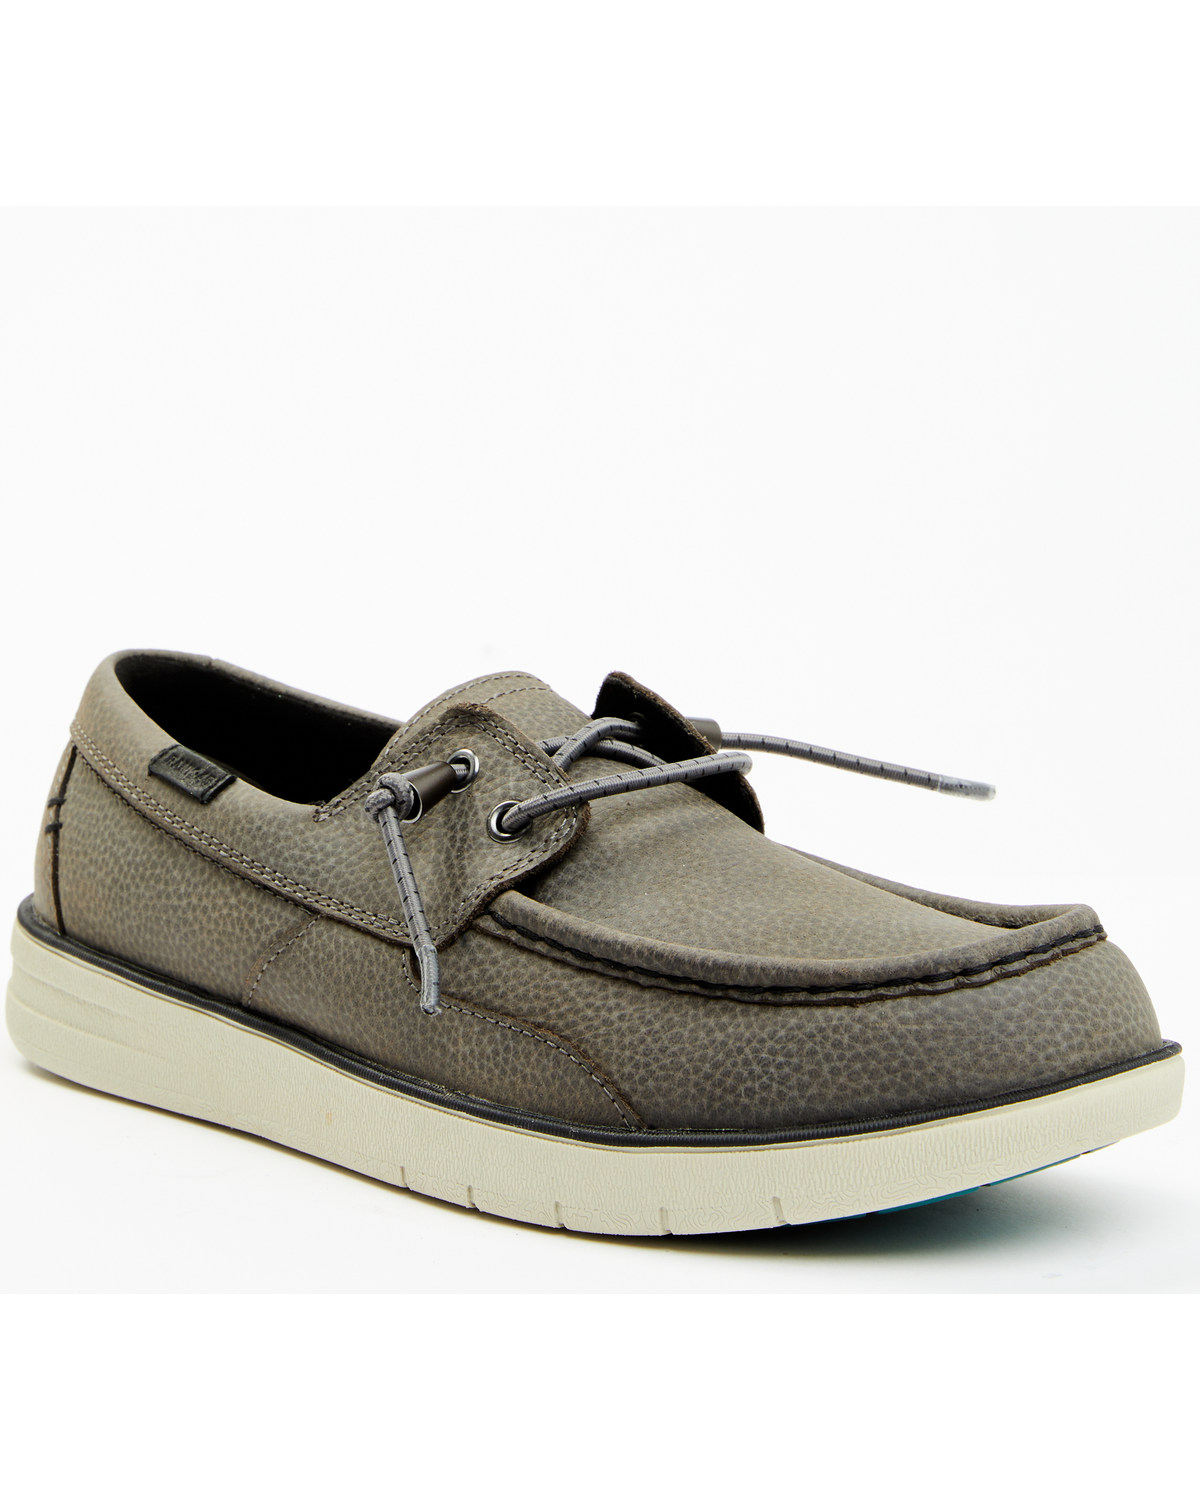 RANK 45® Men's Sanford Western Casual Shoes - Moc Toe